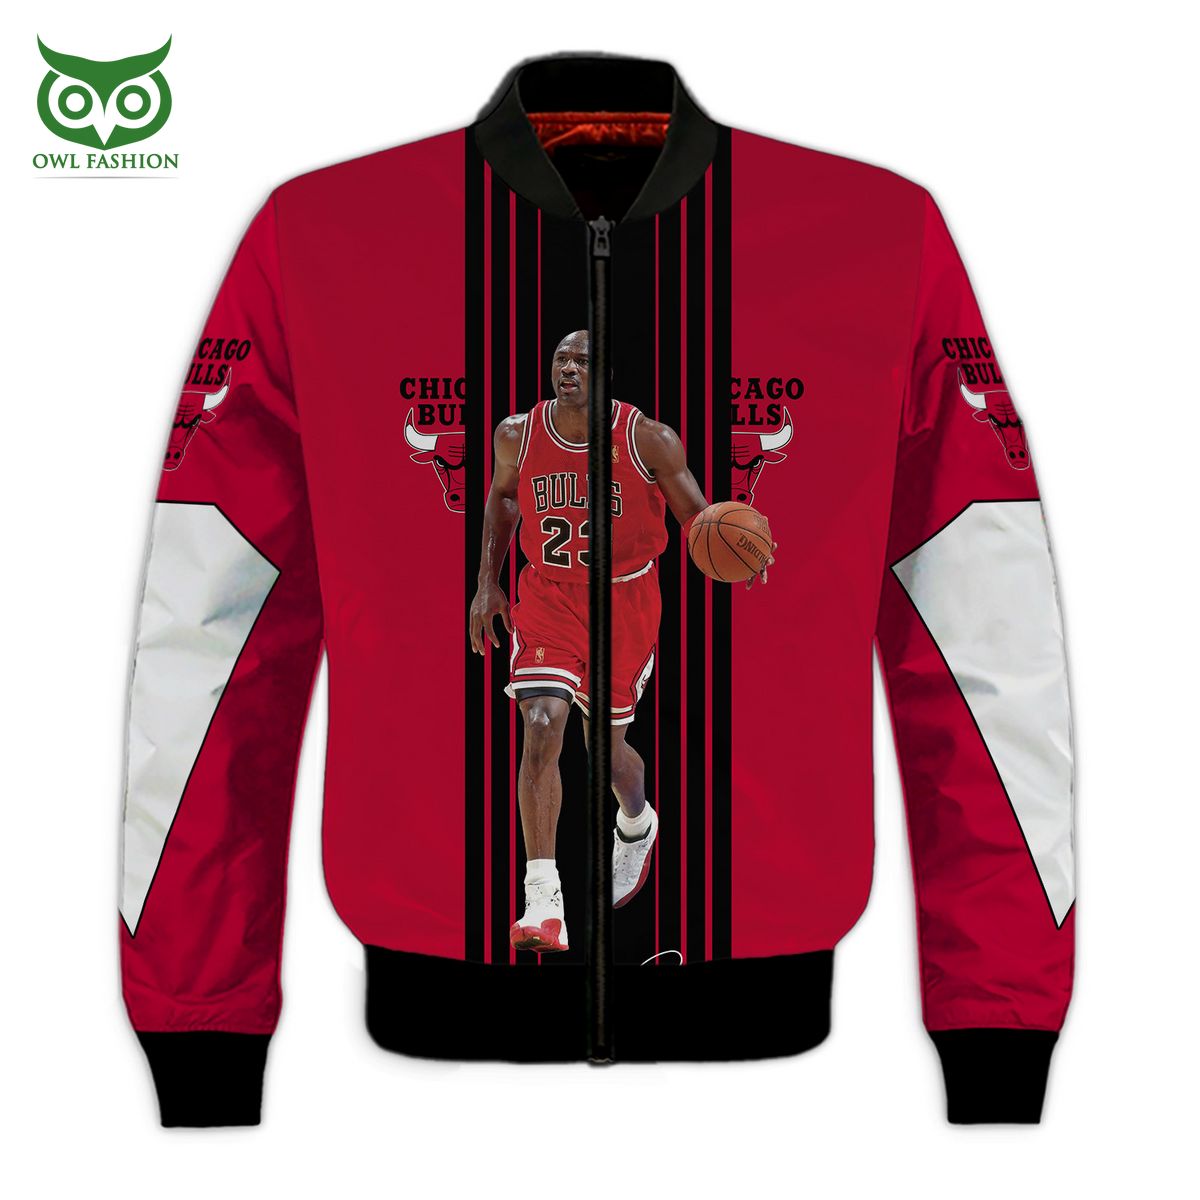 Chicago Bulls Jersey No 23 Black worn by Michael Jordan in The Last Dance